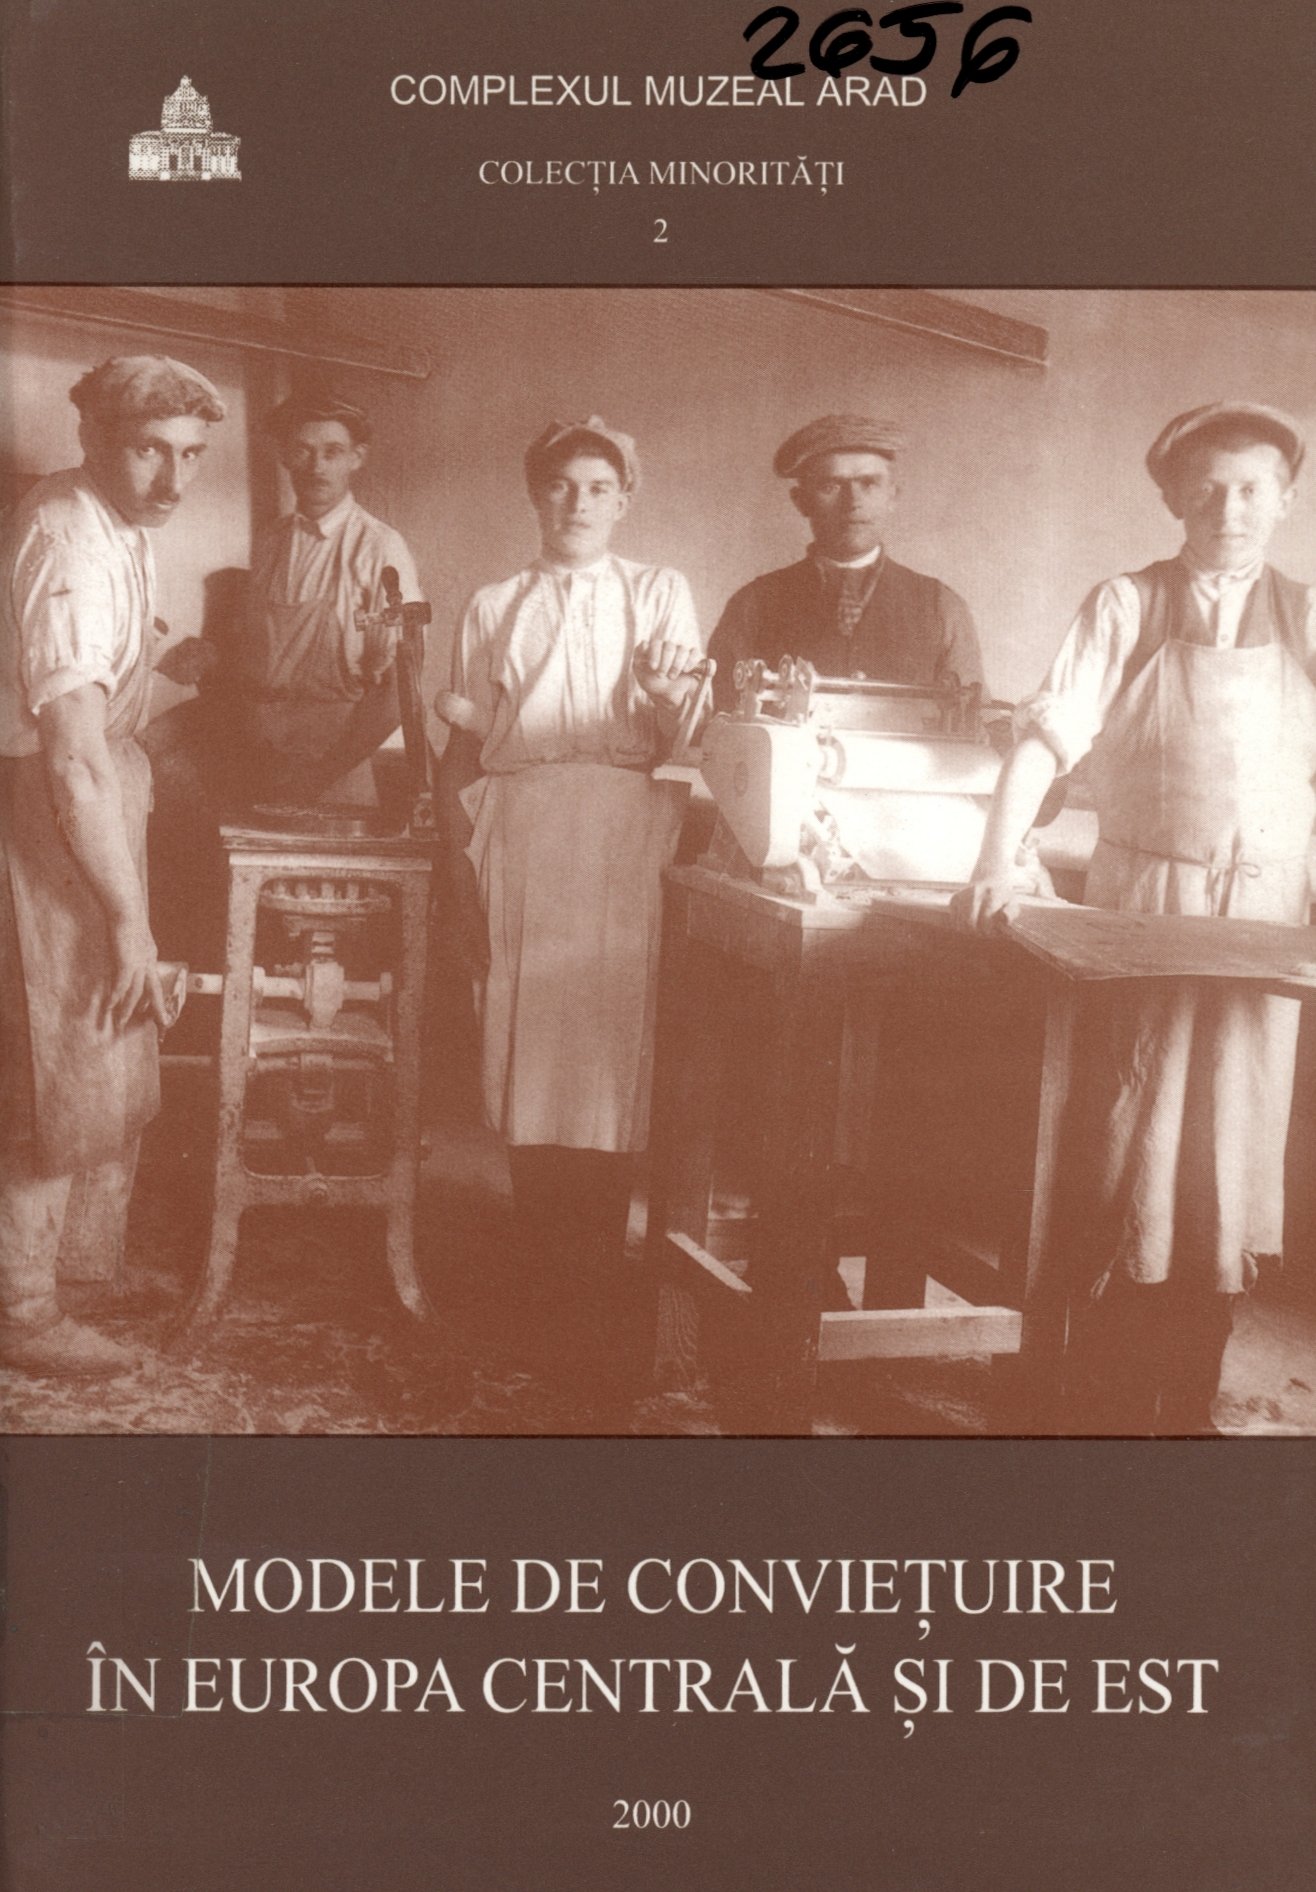 Modele de Convietuire ín Europa Centralá si de Est (Erkel Ferenc Múzeum és Könyvtár, Gyula CC BY-NC-SA)